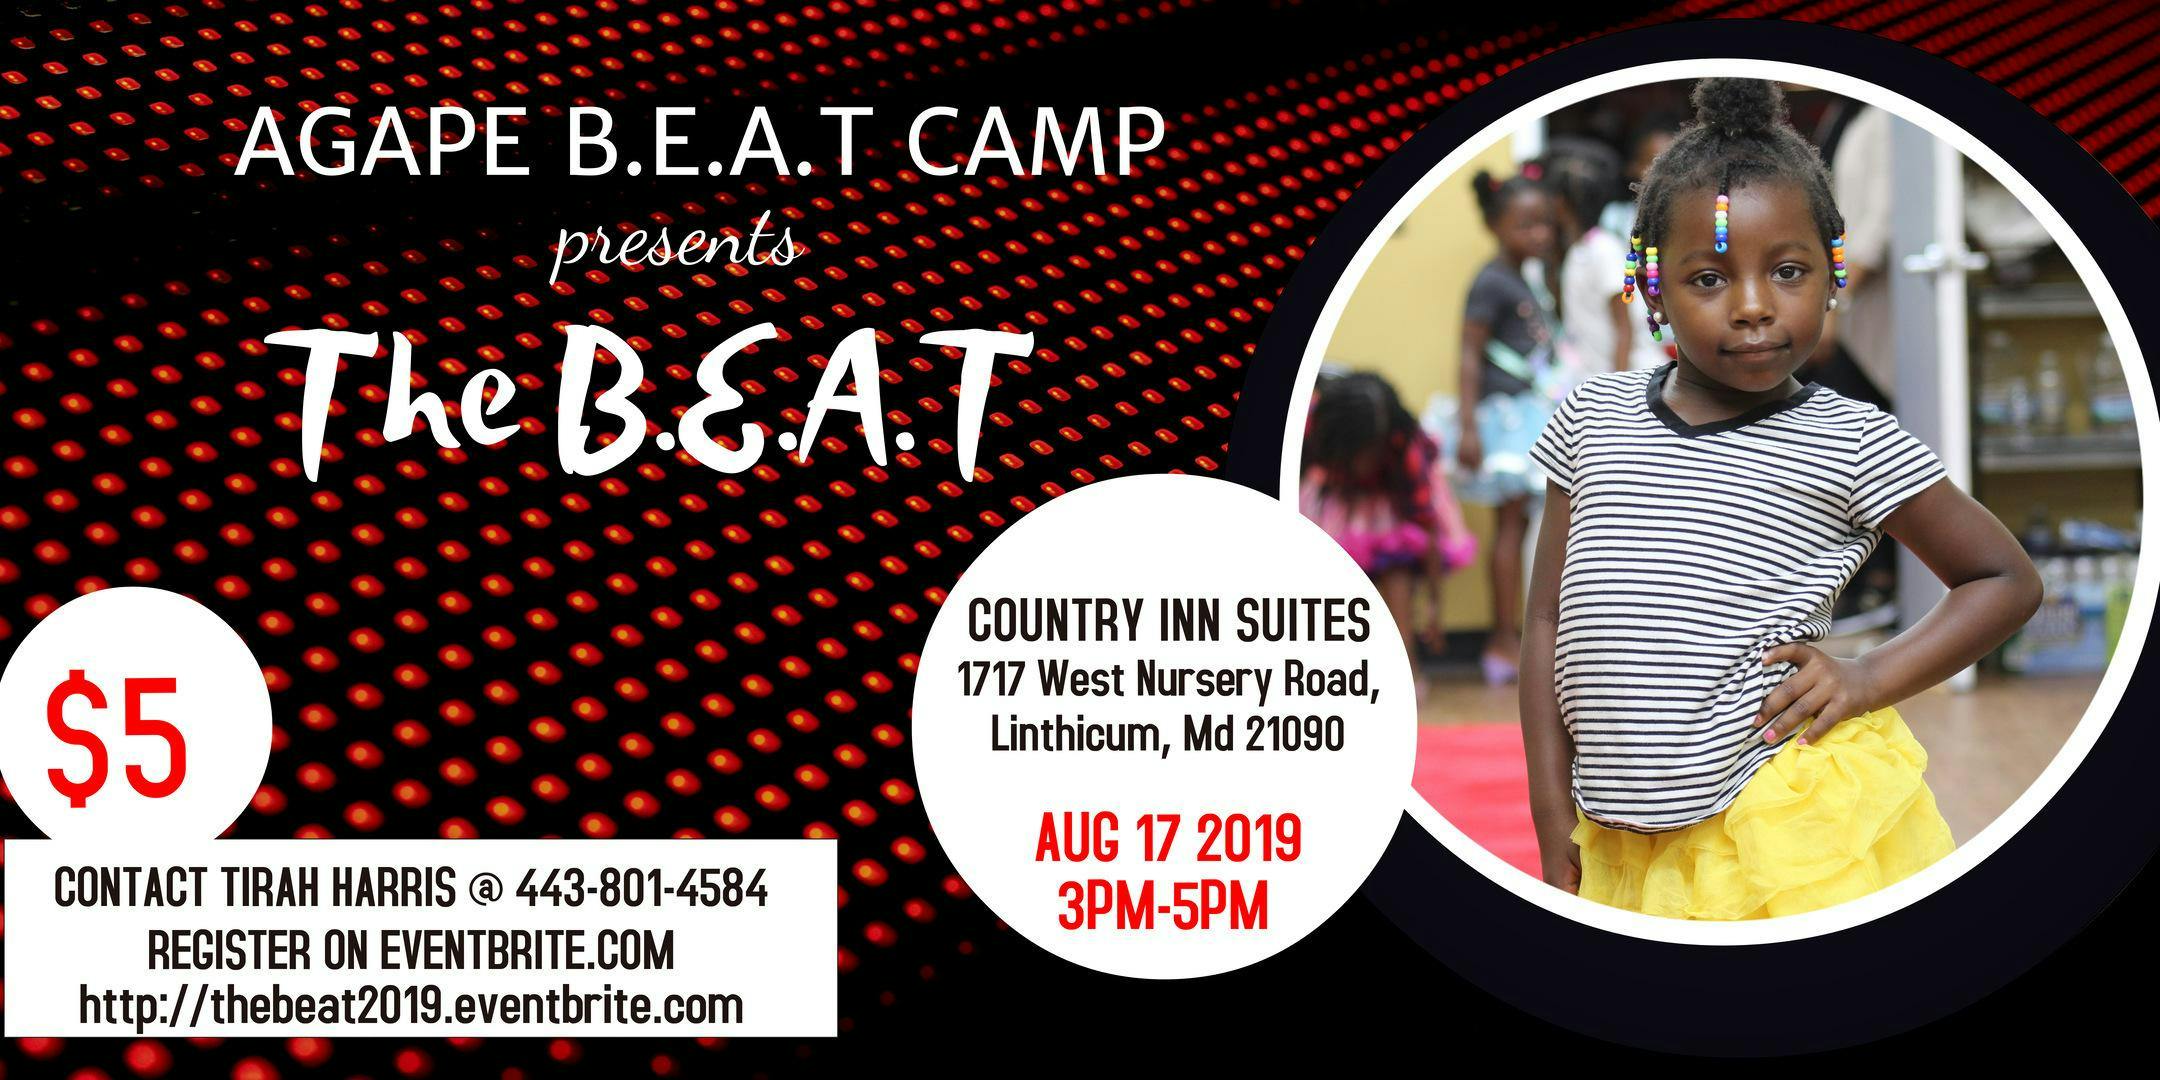 Agape Beat Camp presents The B.E.A.T.